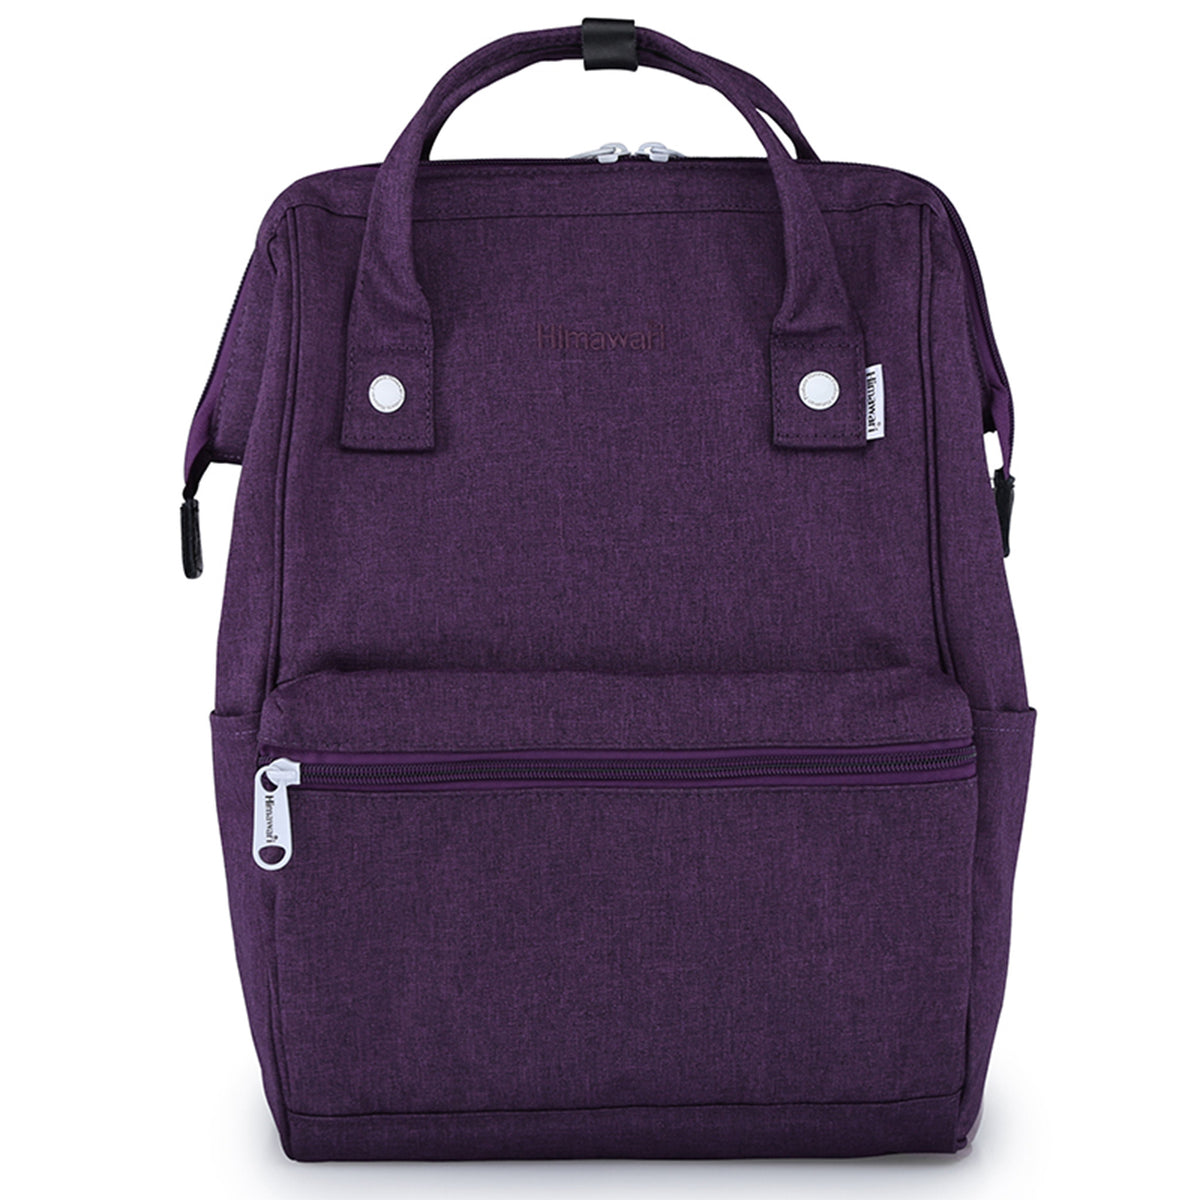 Himawari Laptop Backpack with USB - Purple